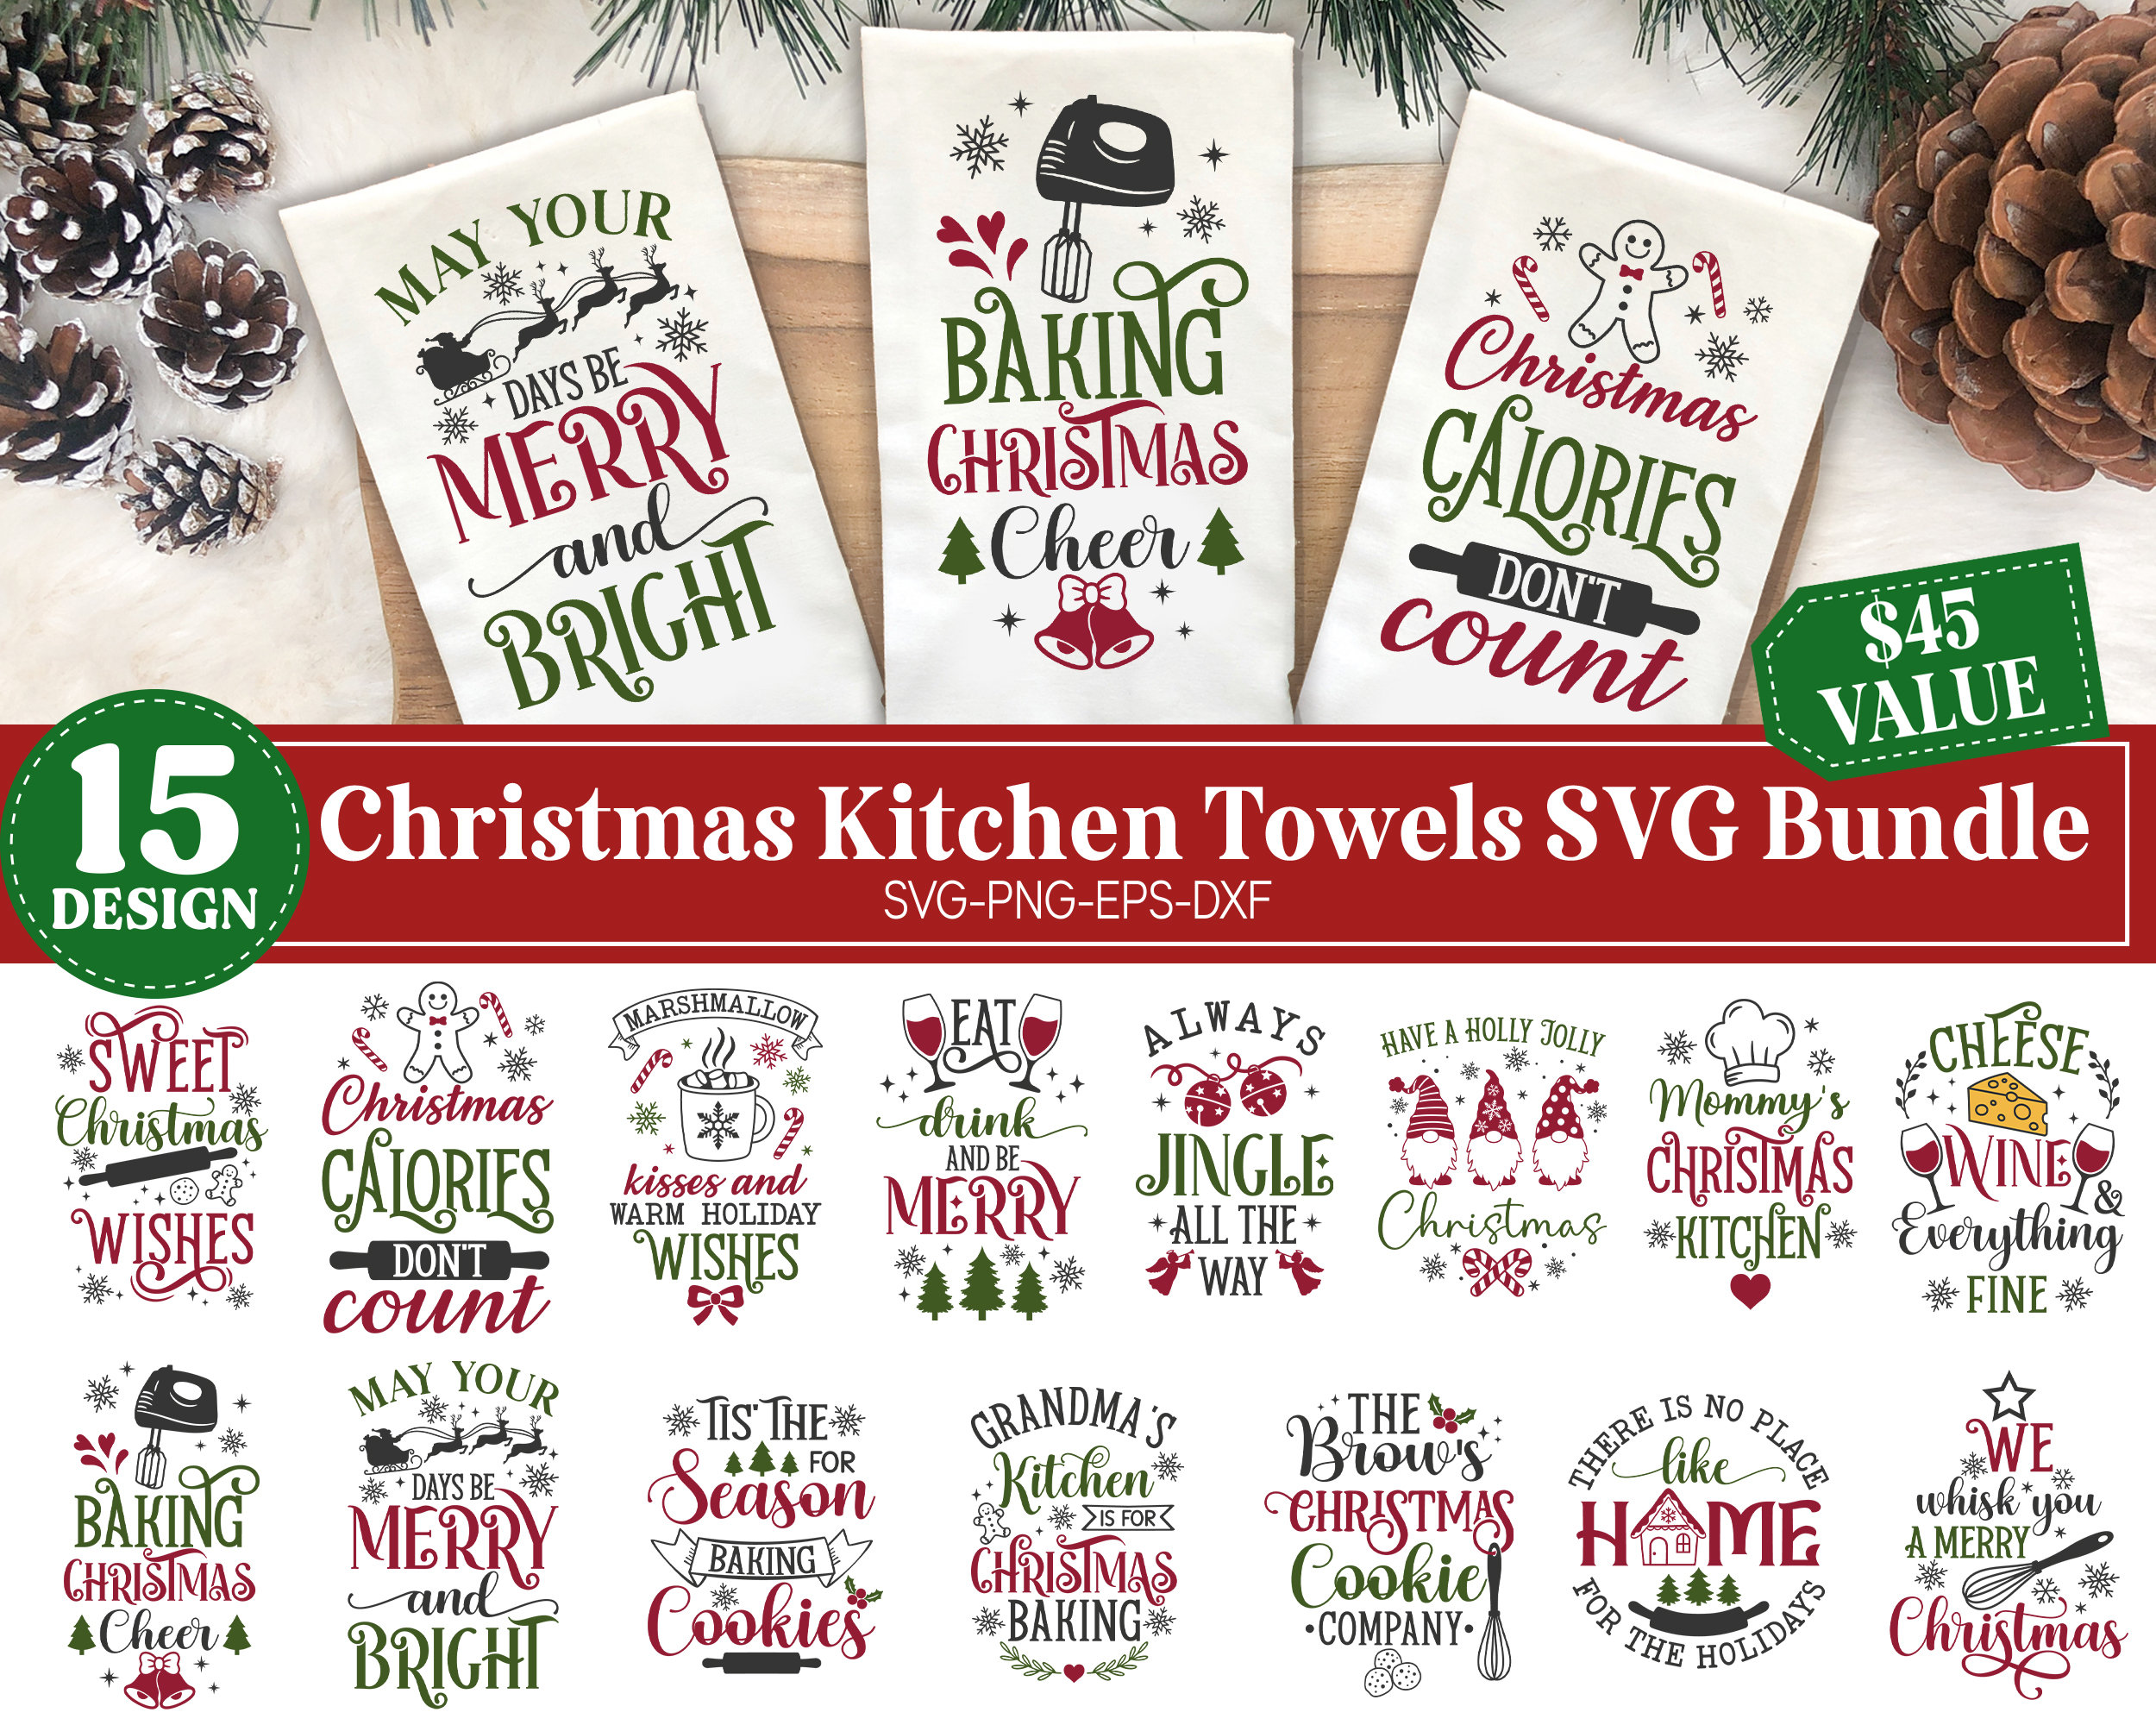 Dish Towel & Wash Cloth Neighbor Christmas Gift Idea - Saving Cent by Cent